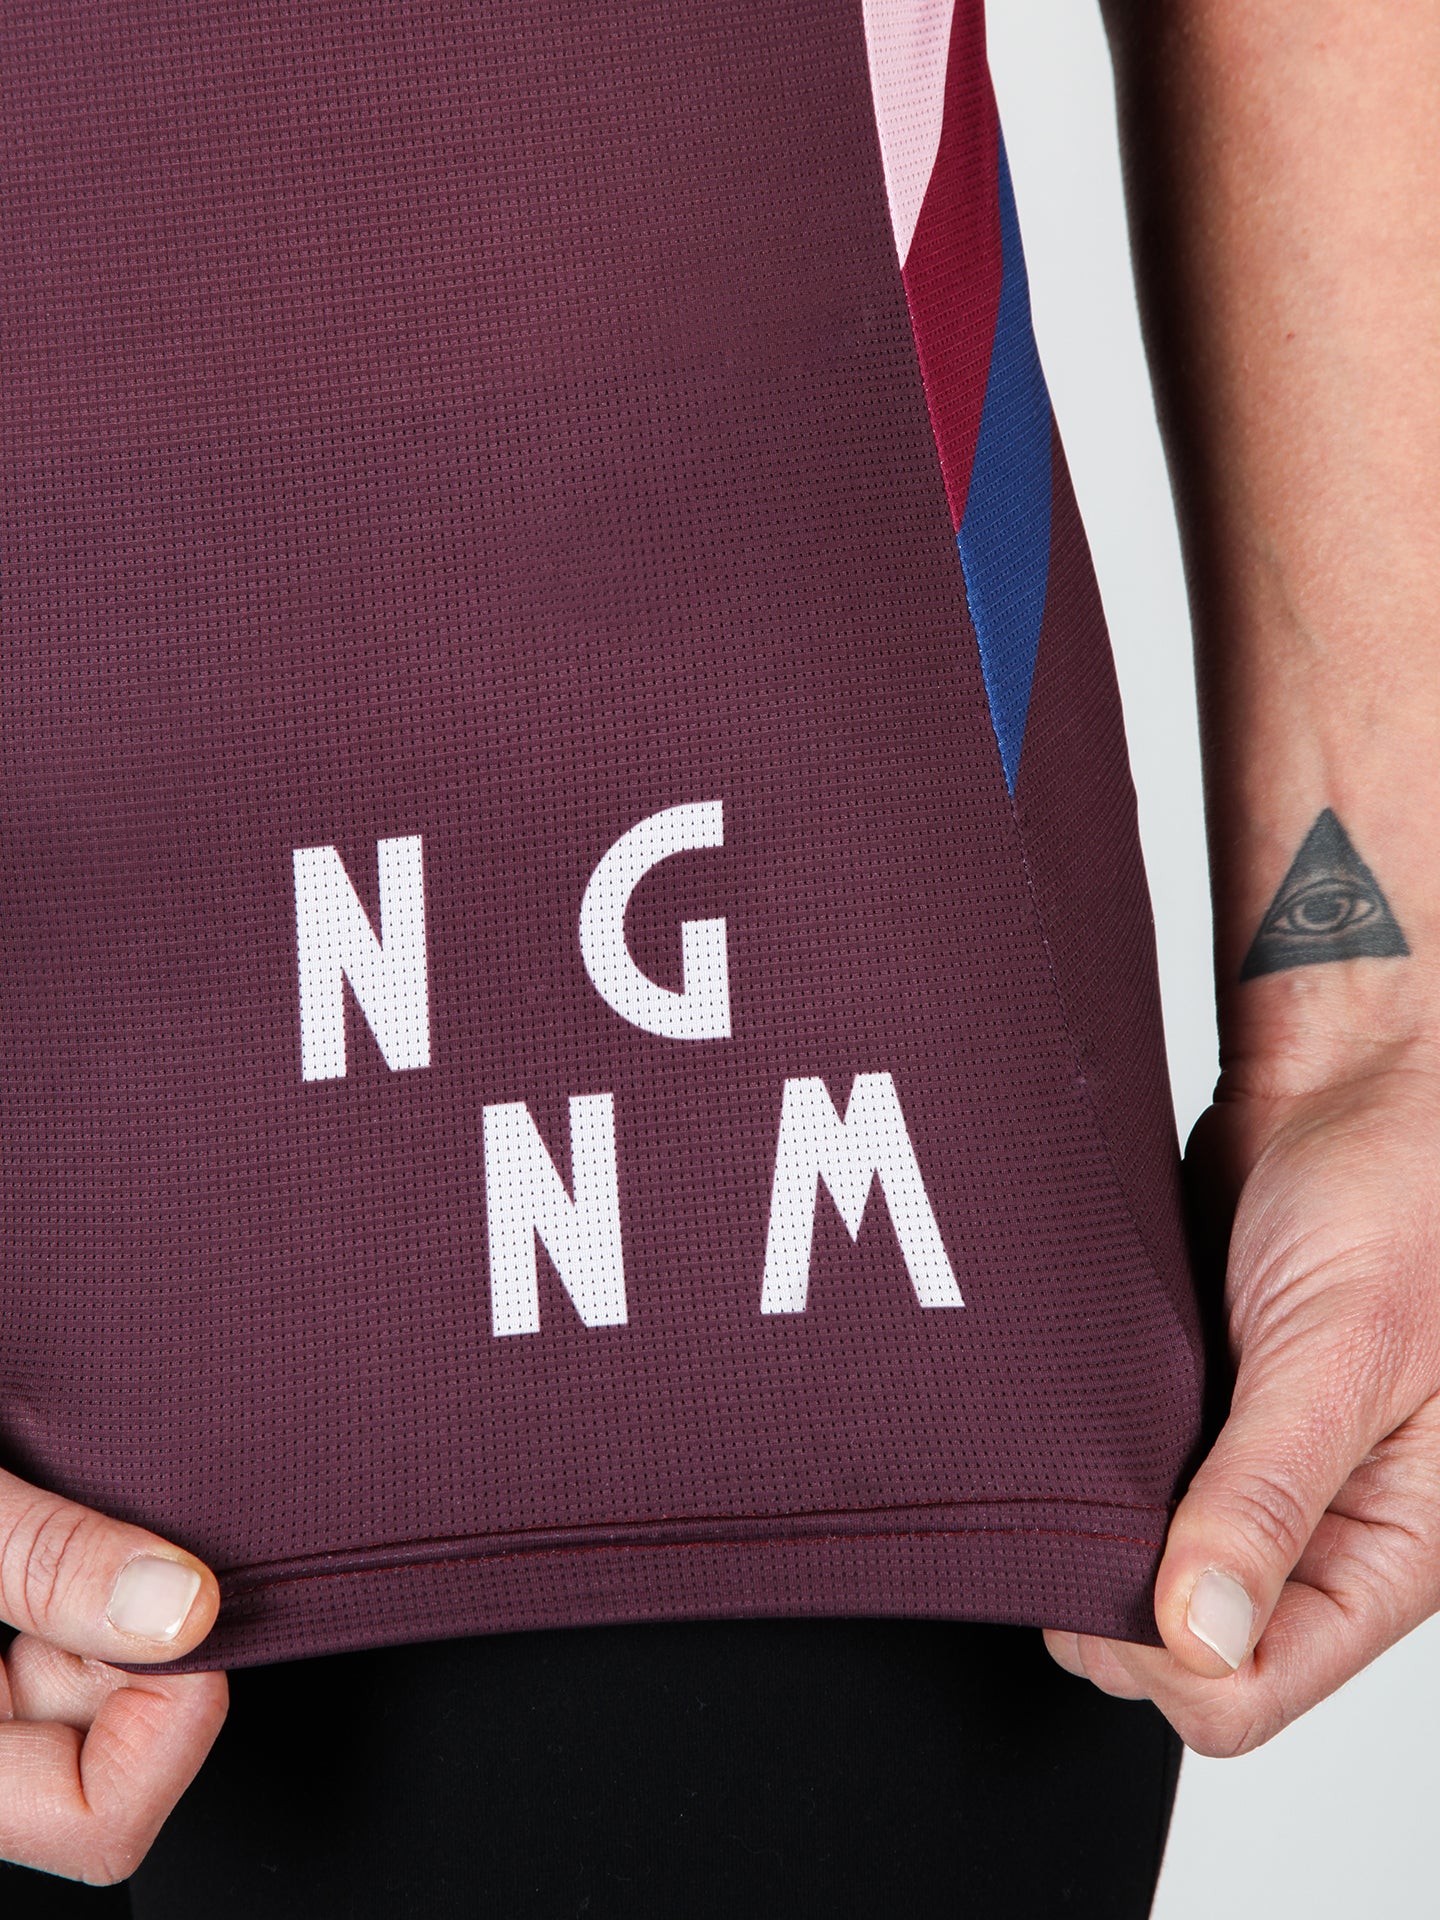 NGNM Tank ZWIFT running top aubergine Detail logo